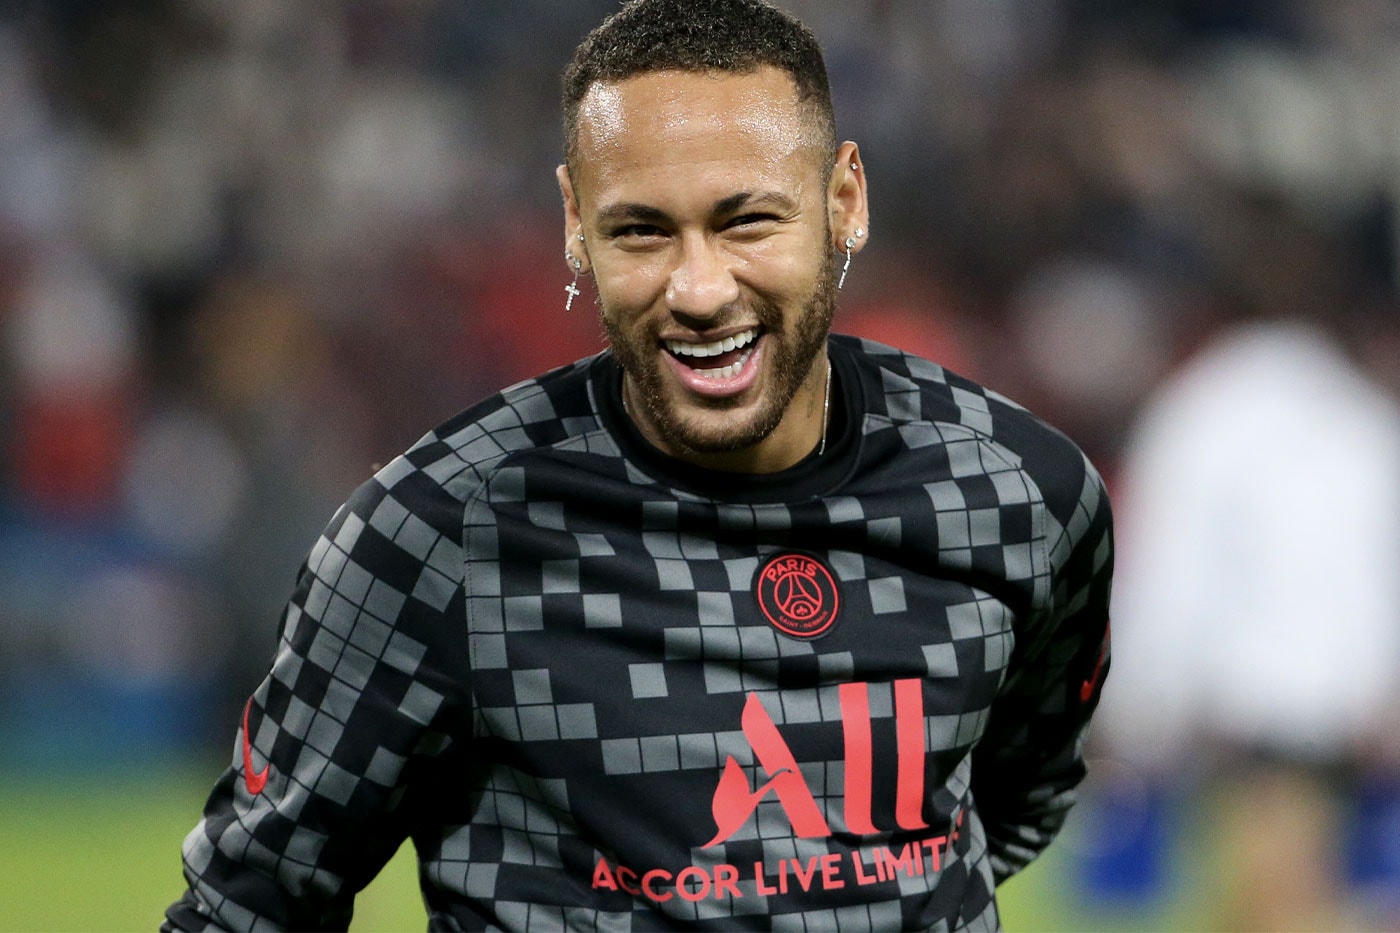 Neymar Jr. Signs Exclusive Streaming Deal With Facebook Gaming meta metaverse psg paris saint german football soccer fortnite fifa esports